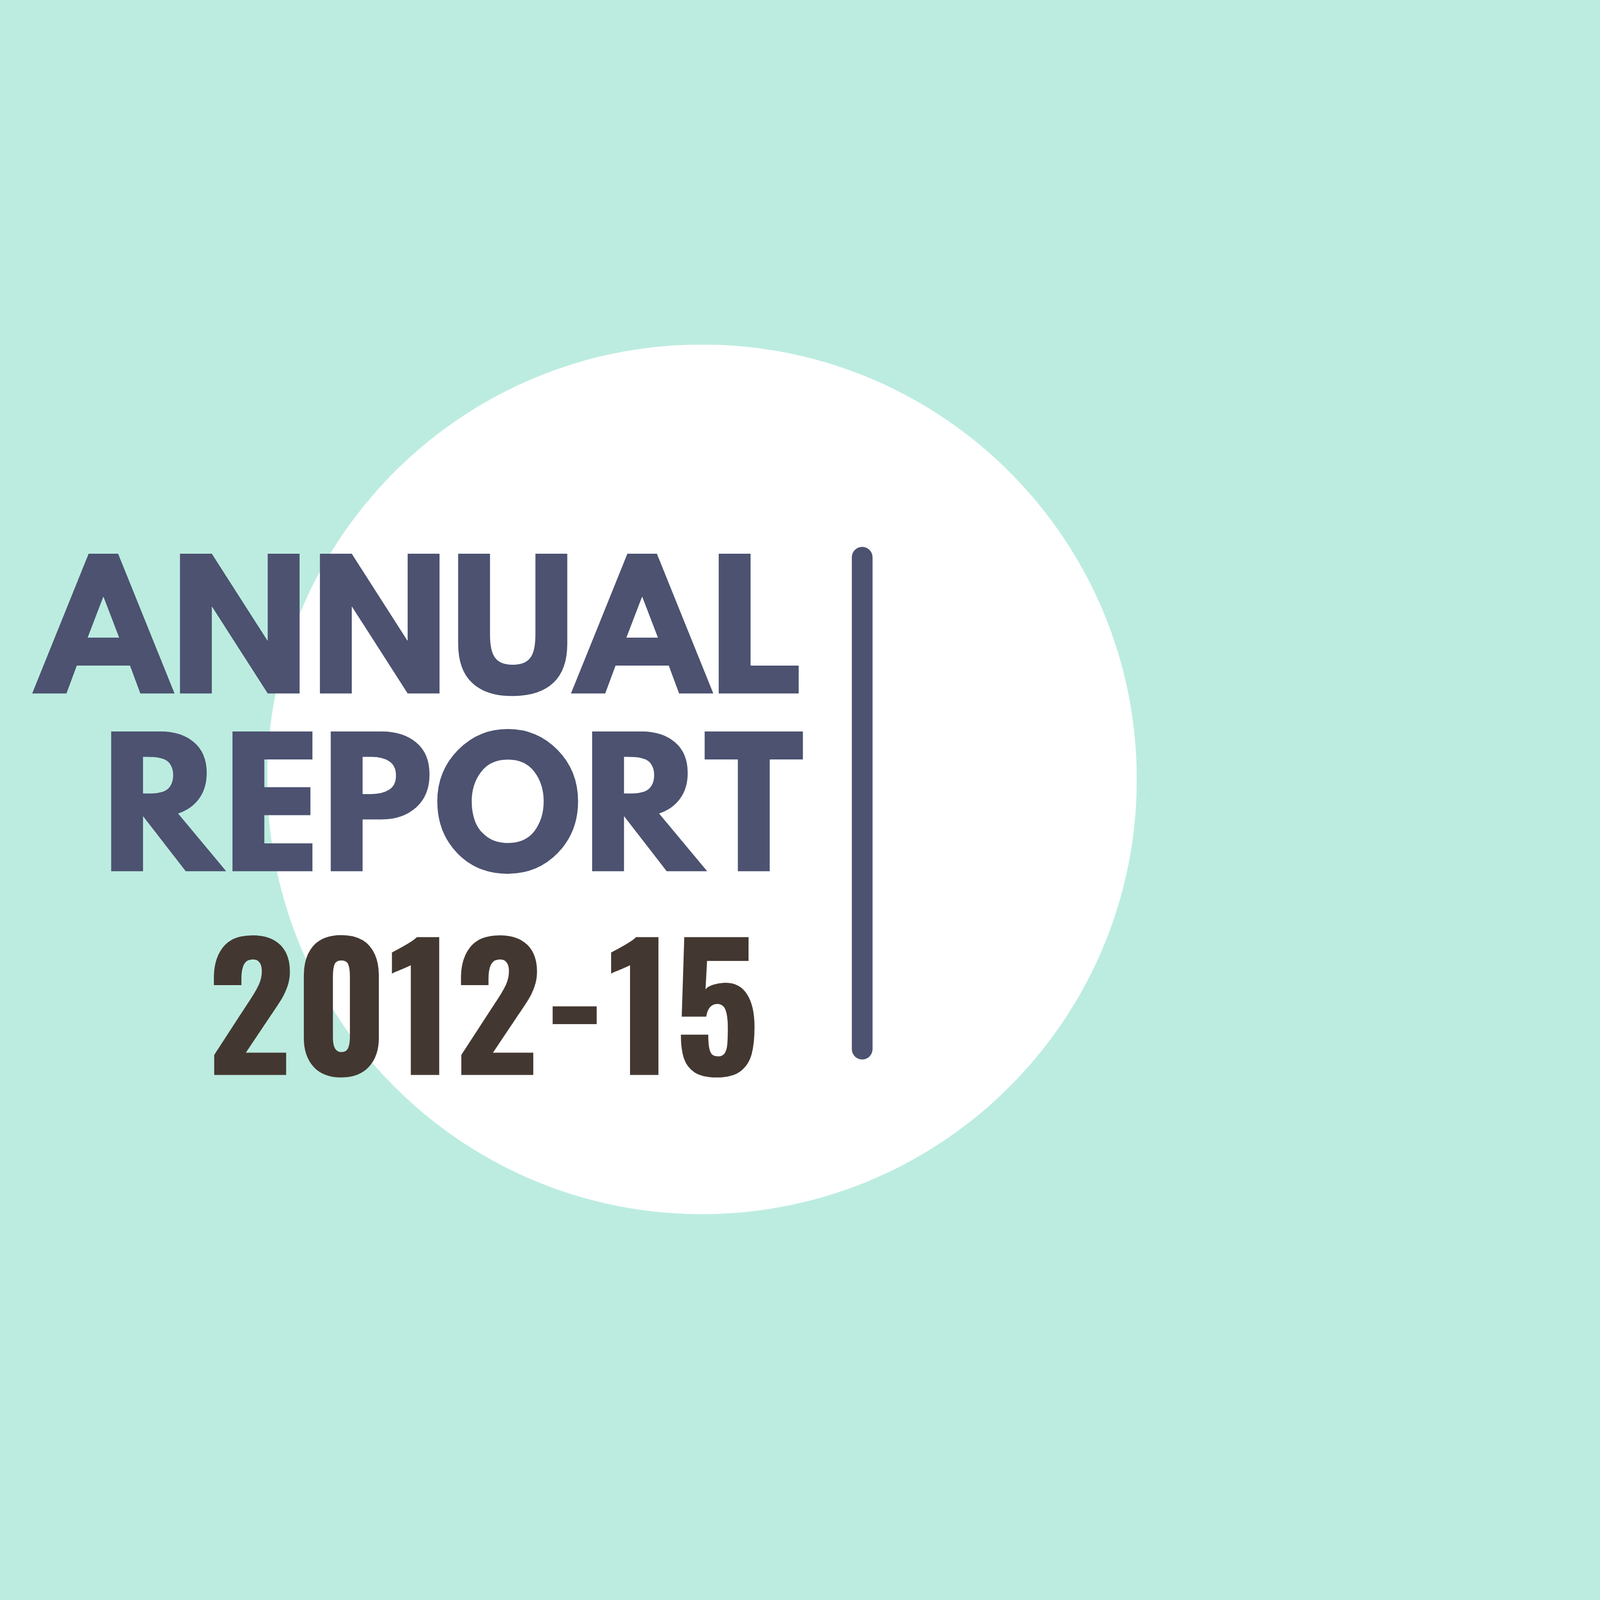 Annual Report - 2012-15